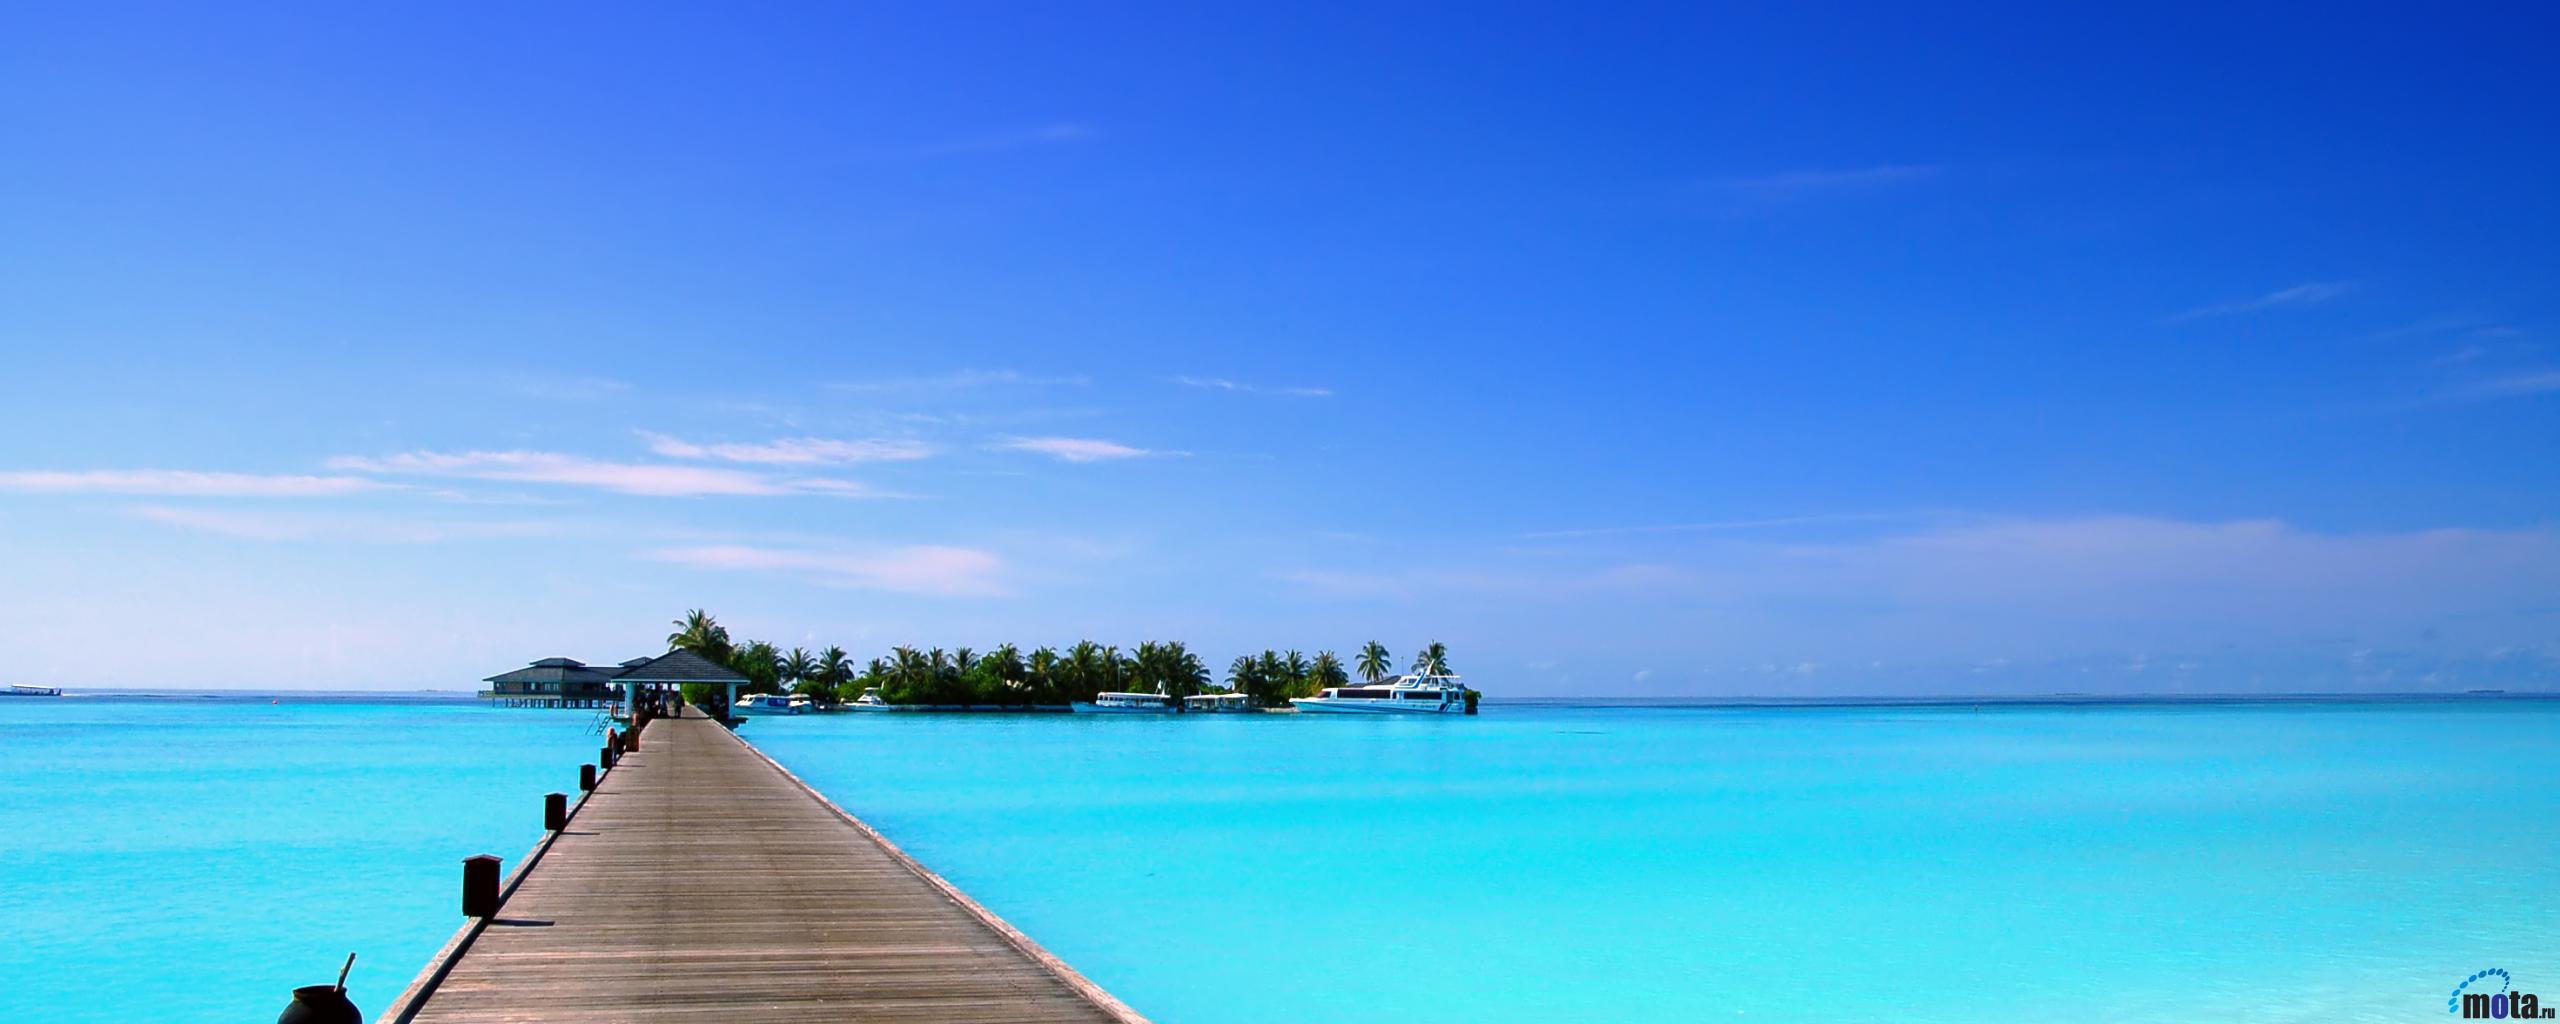 Desktop Wallpaper Sun Island Hotel Maldives Islands